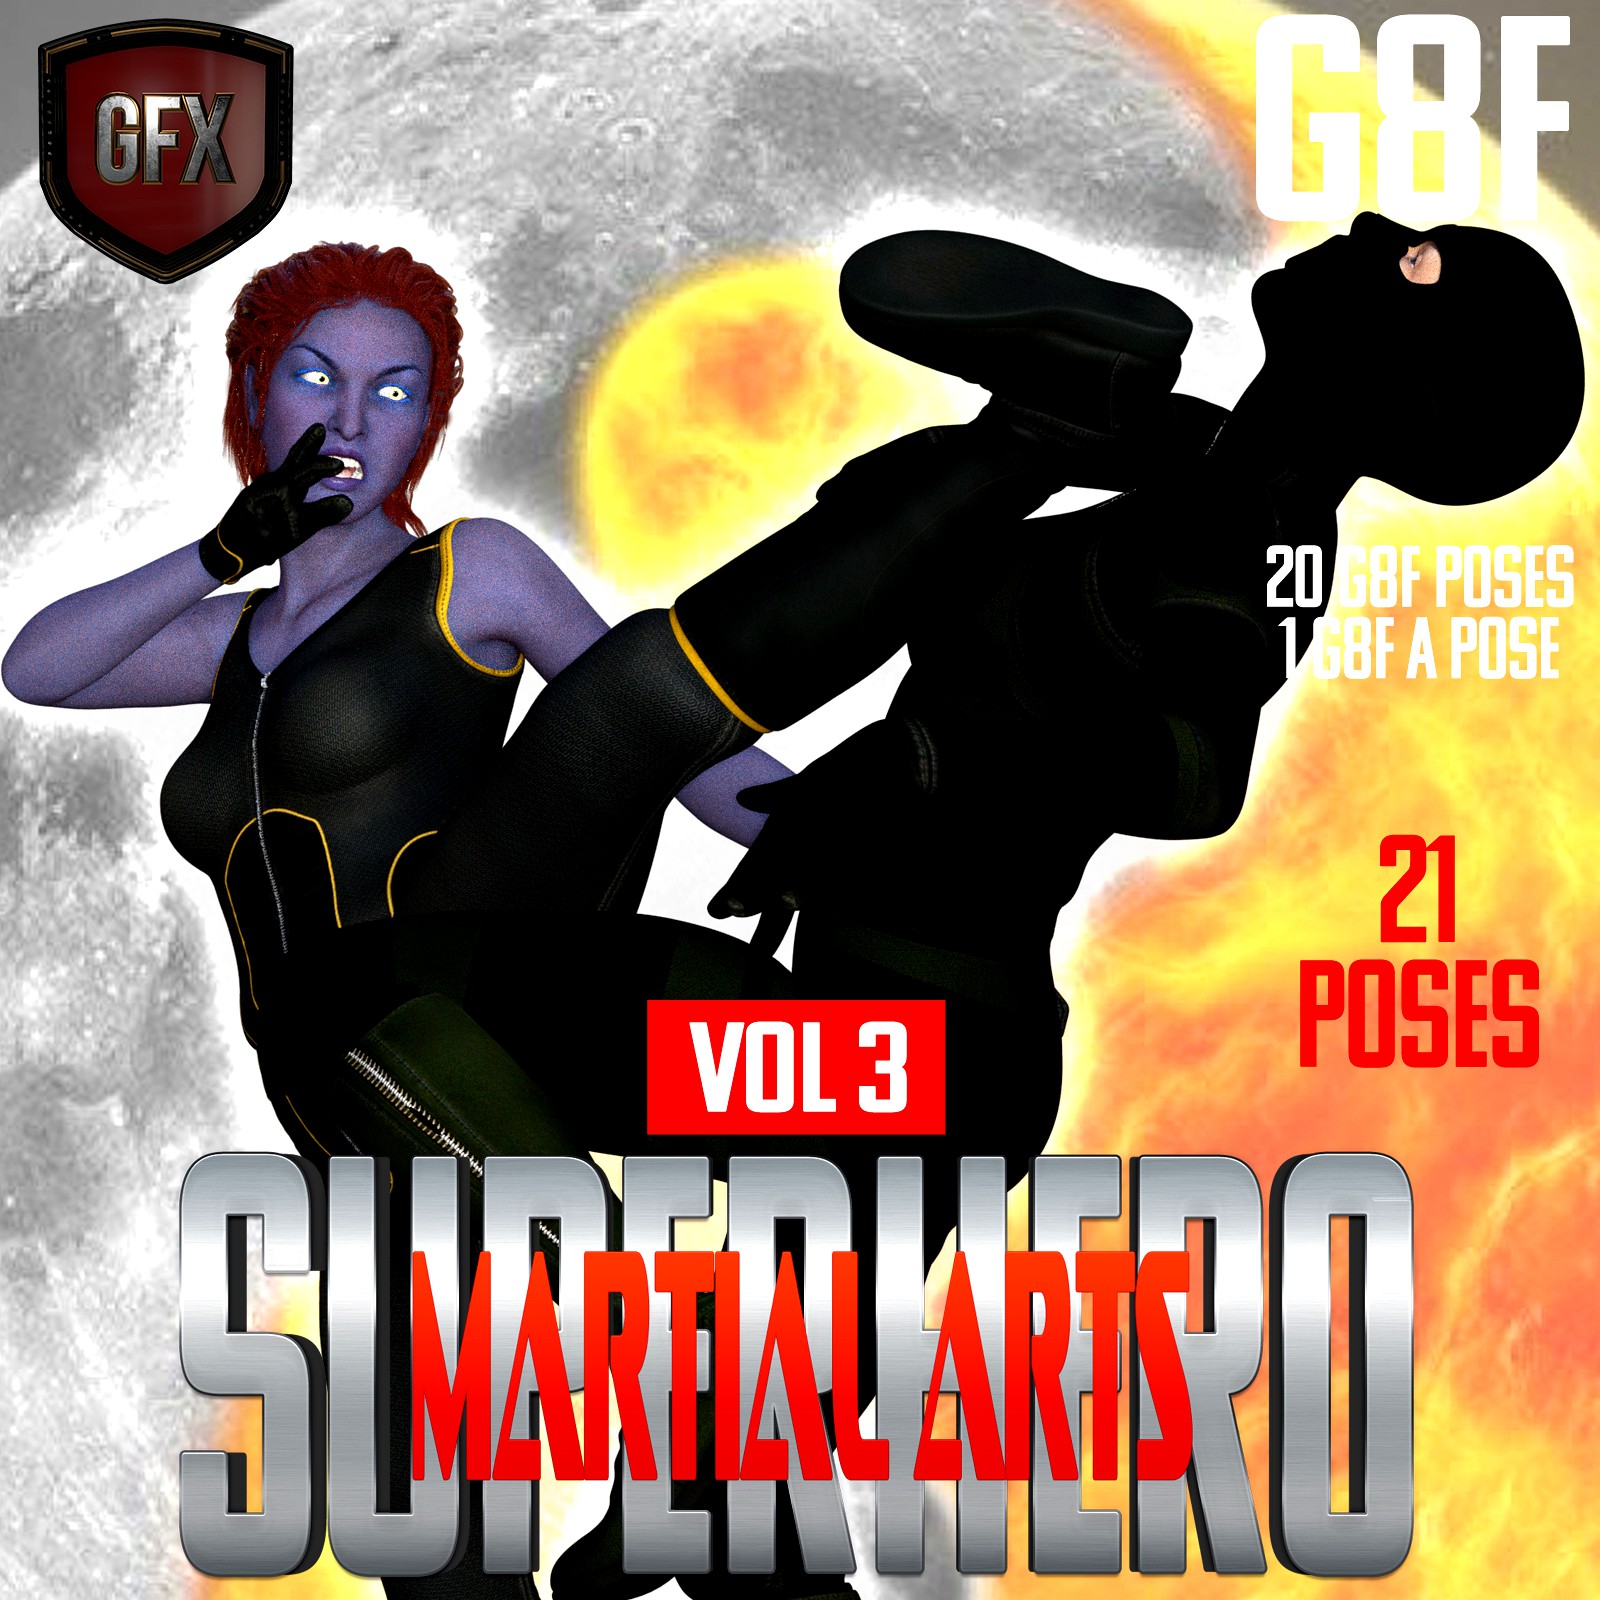 SuperHero Martial Arts for G8F Volume 3